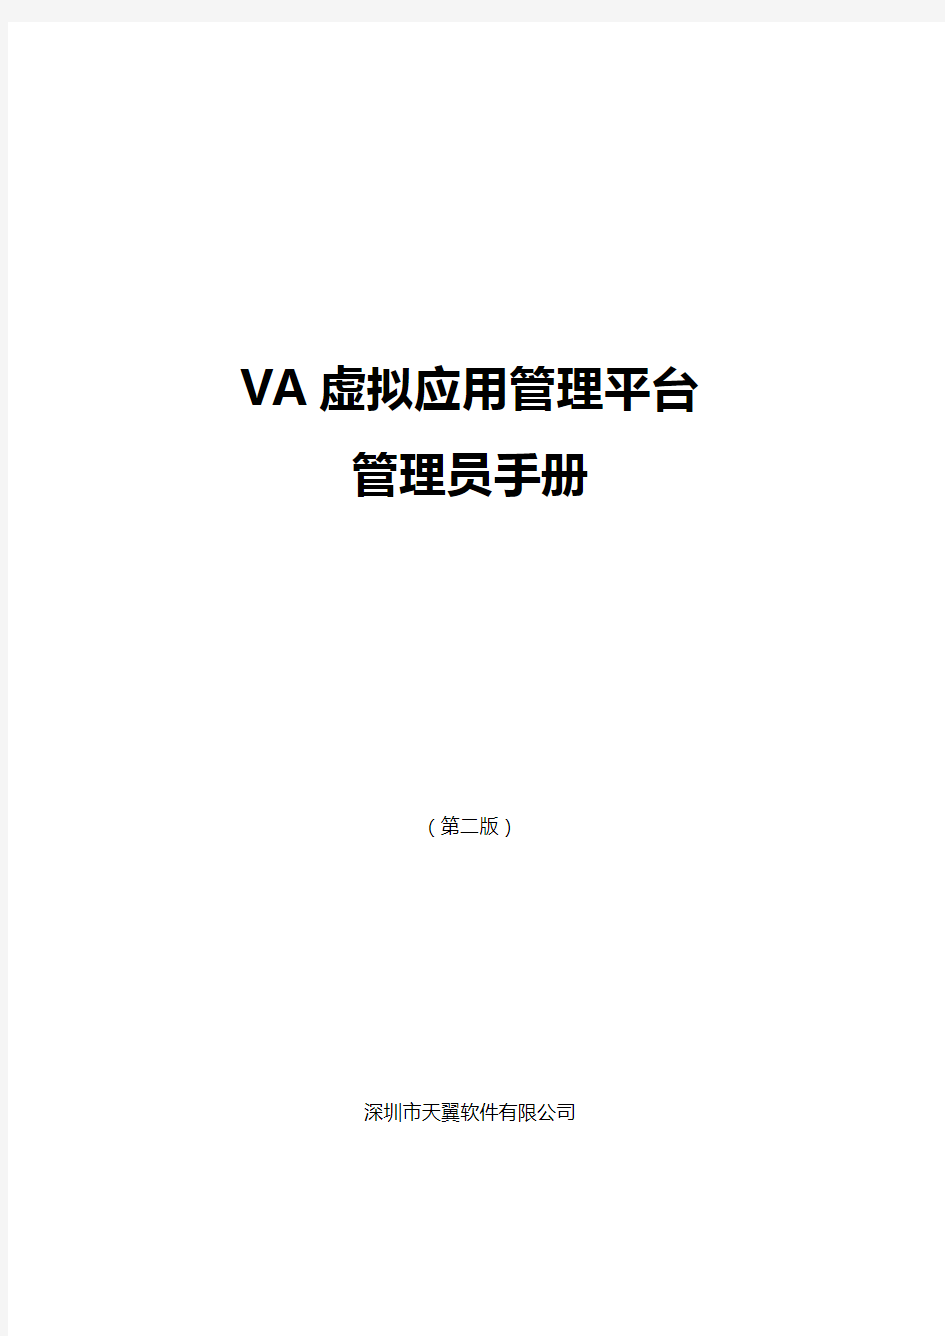 VA虚拟应用管理平台管理员手册